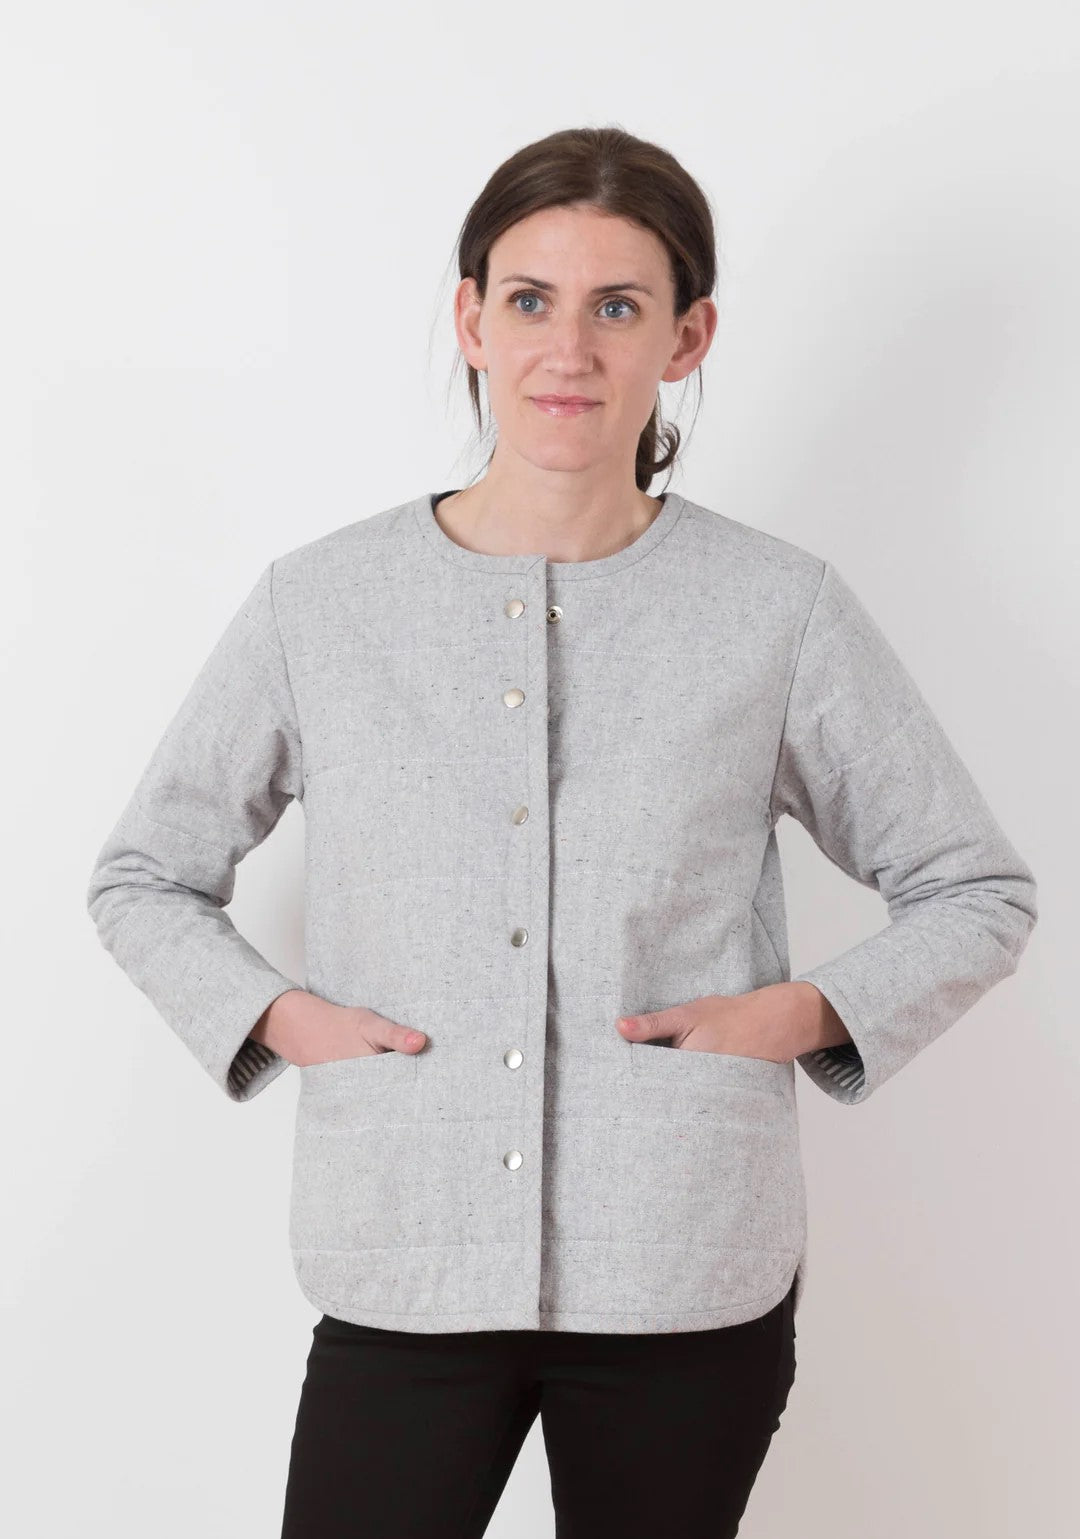 Tamarack Jacket Sewing Pattern (Size 0-18) - Grainline Studio